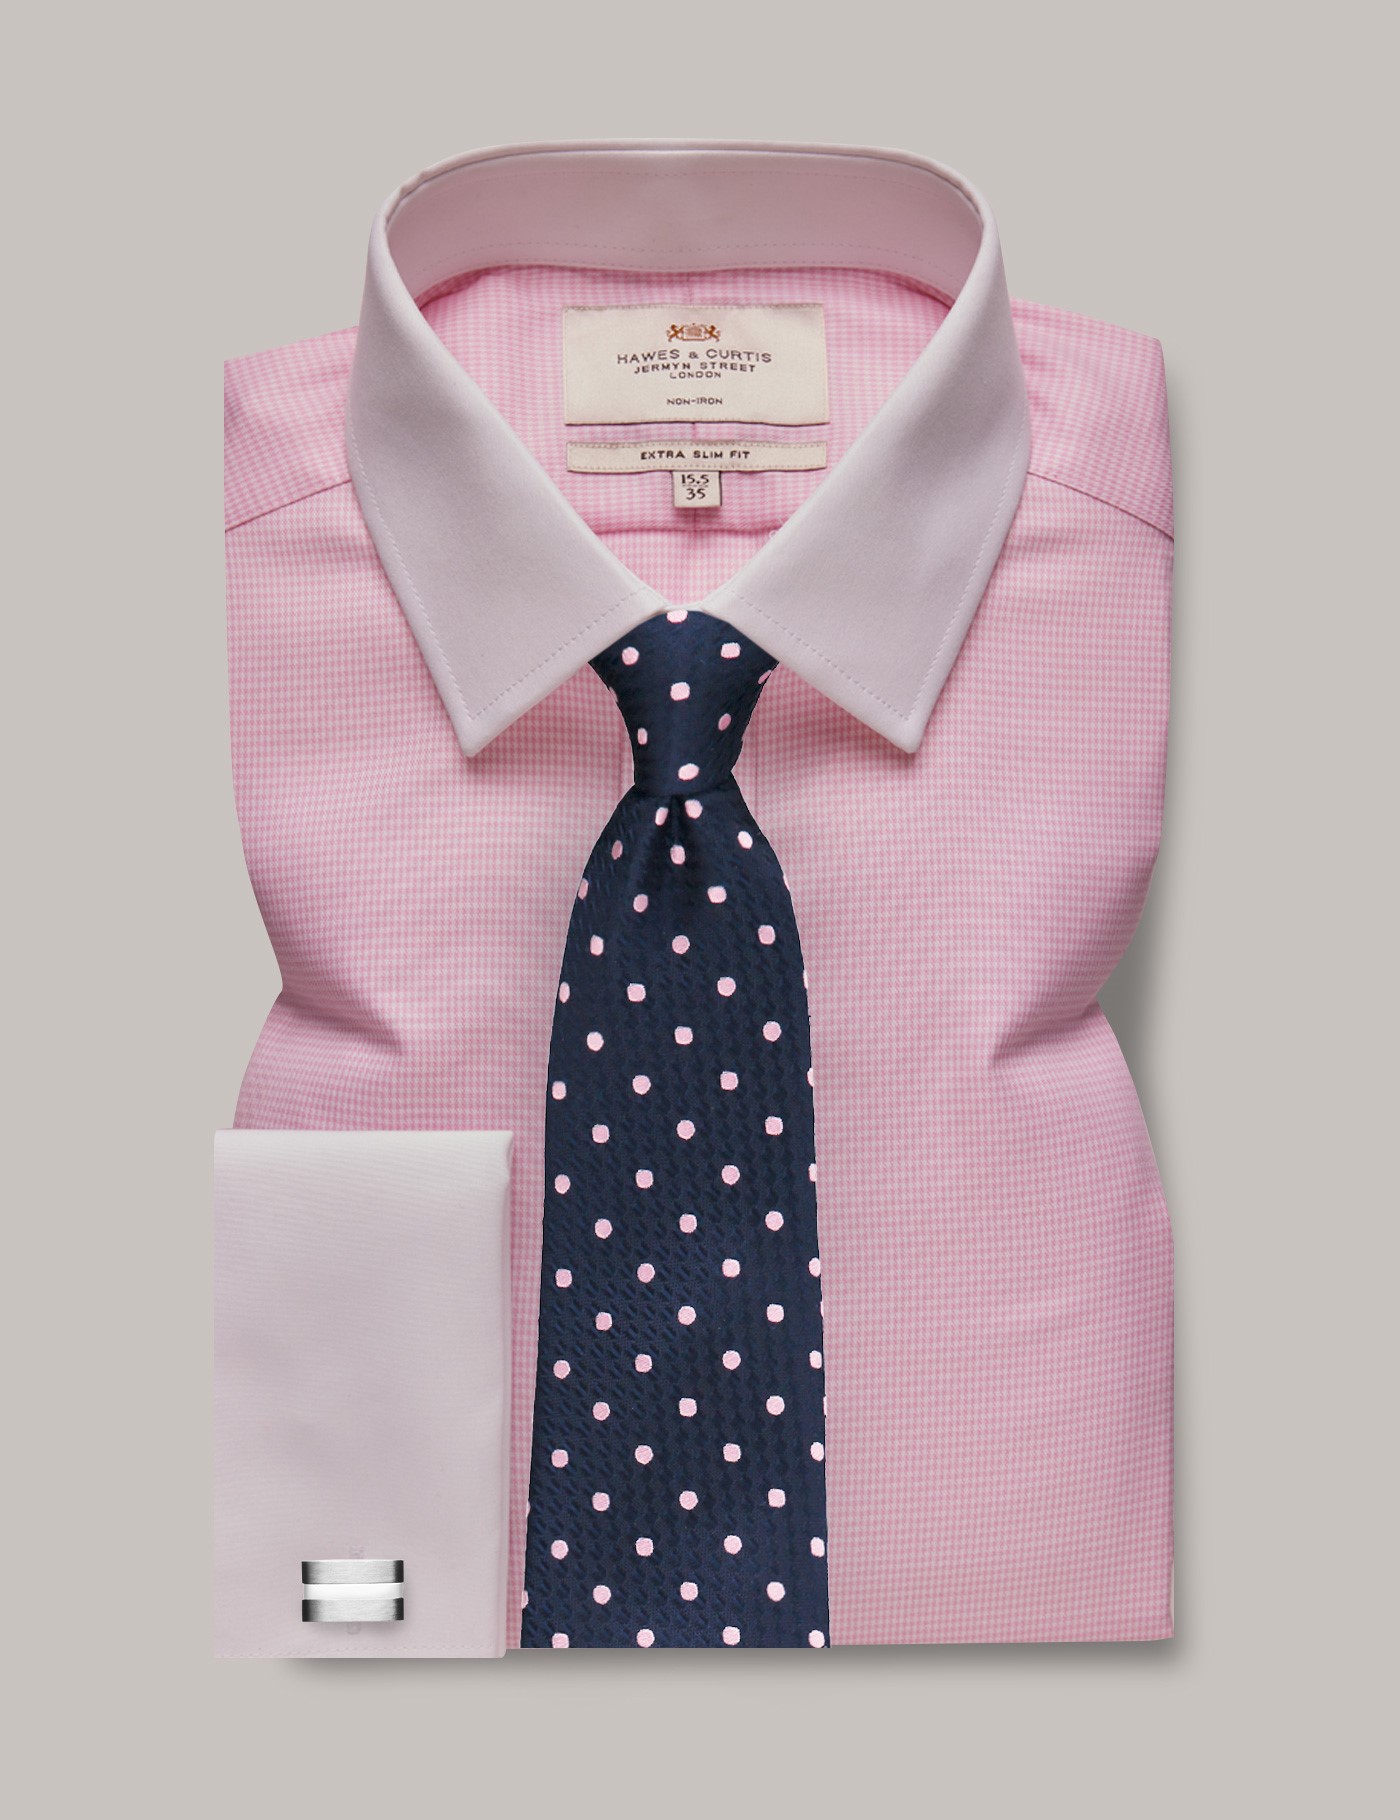 Men's Non-Iron Pink & White Dogtooth Extra Slim Shirt with White Collar ...